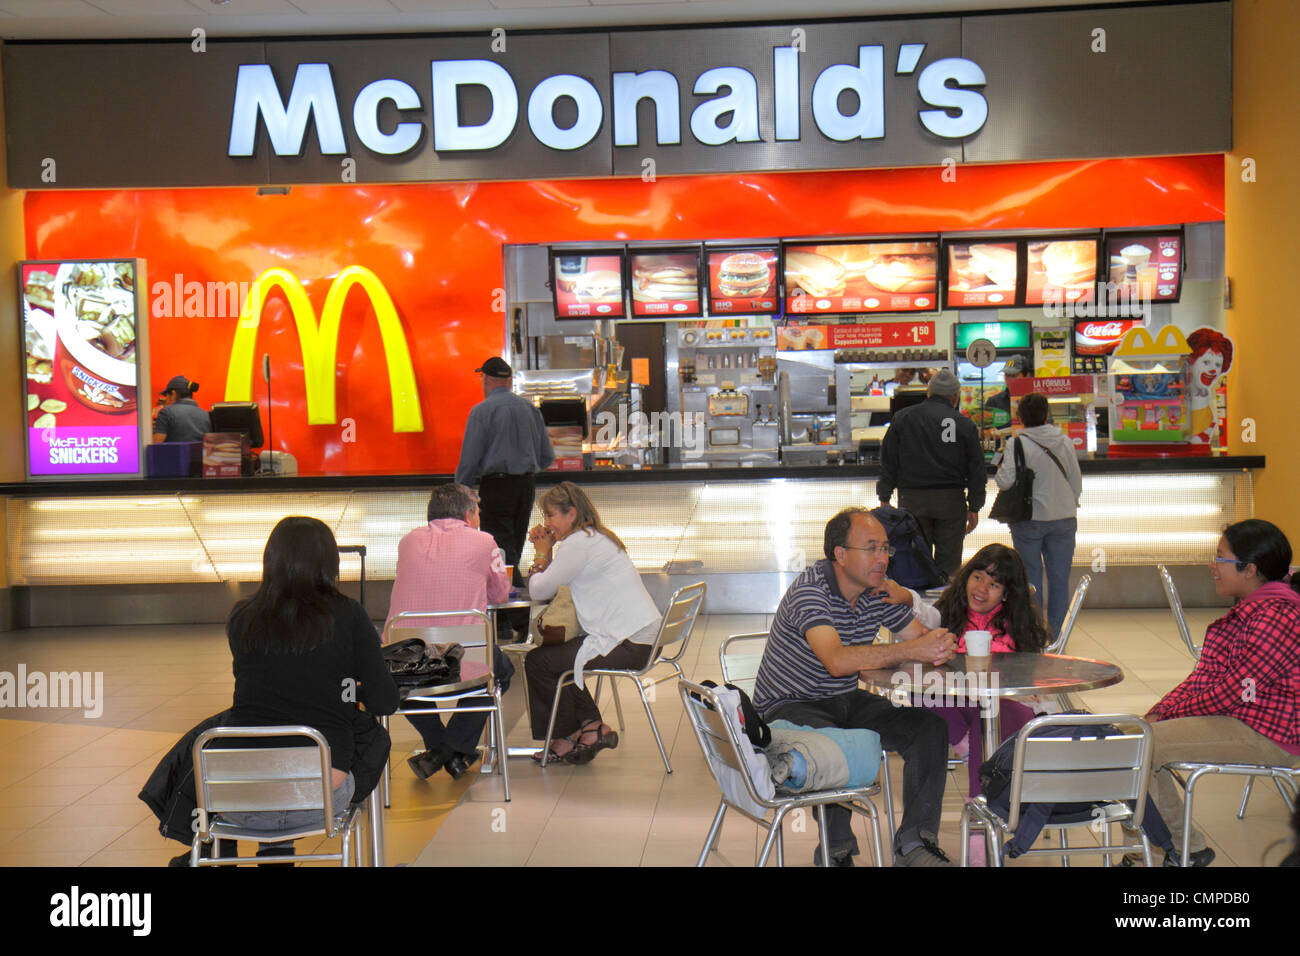 Lima Peru,Jorge Chávez International Airport,LIM,aviation,terminal,McDonald's,burgers,hamburgers,restaurant restaurants food dining cafe cafes,fast fo Stock Photo